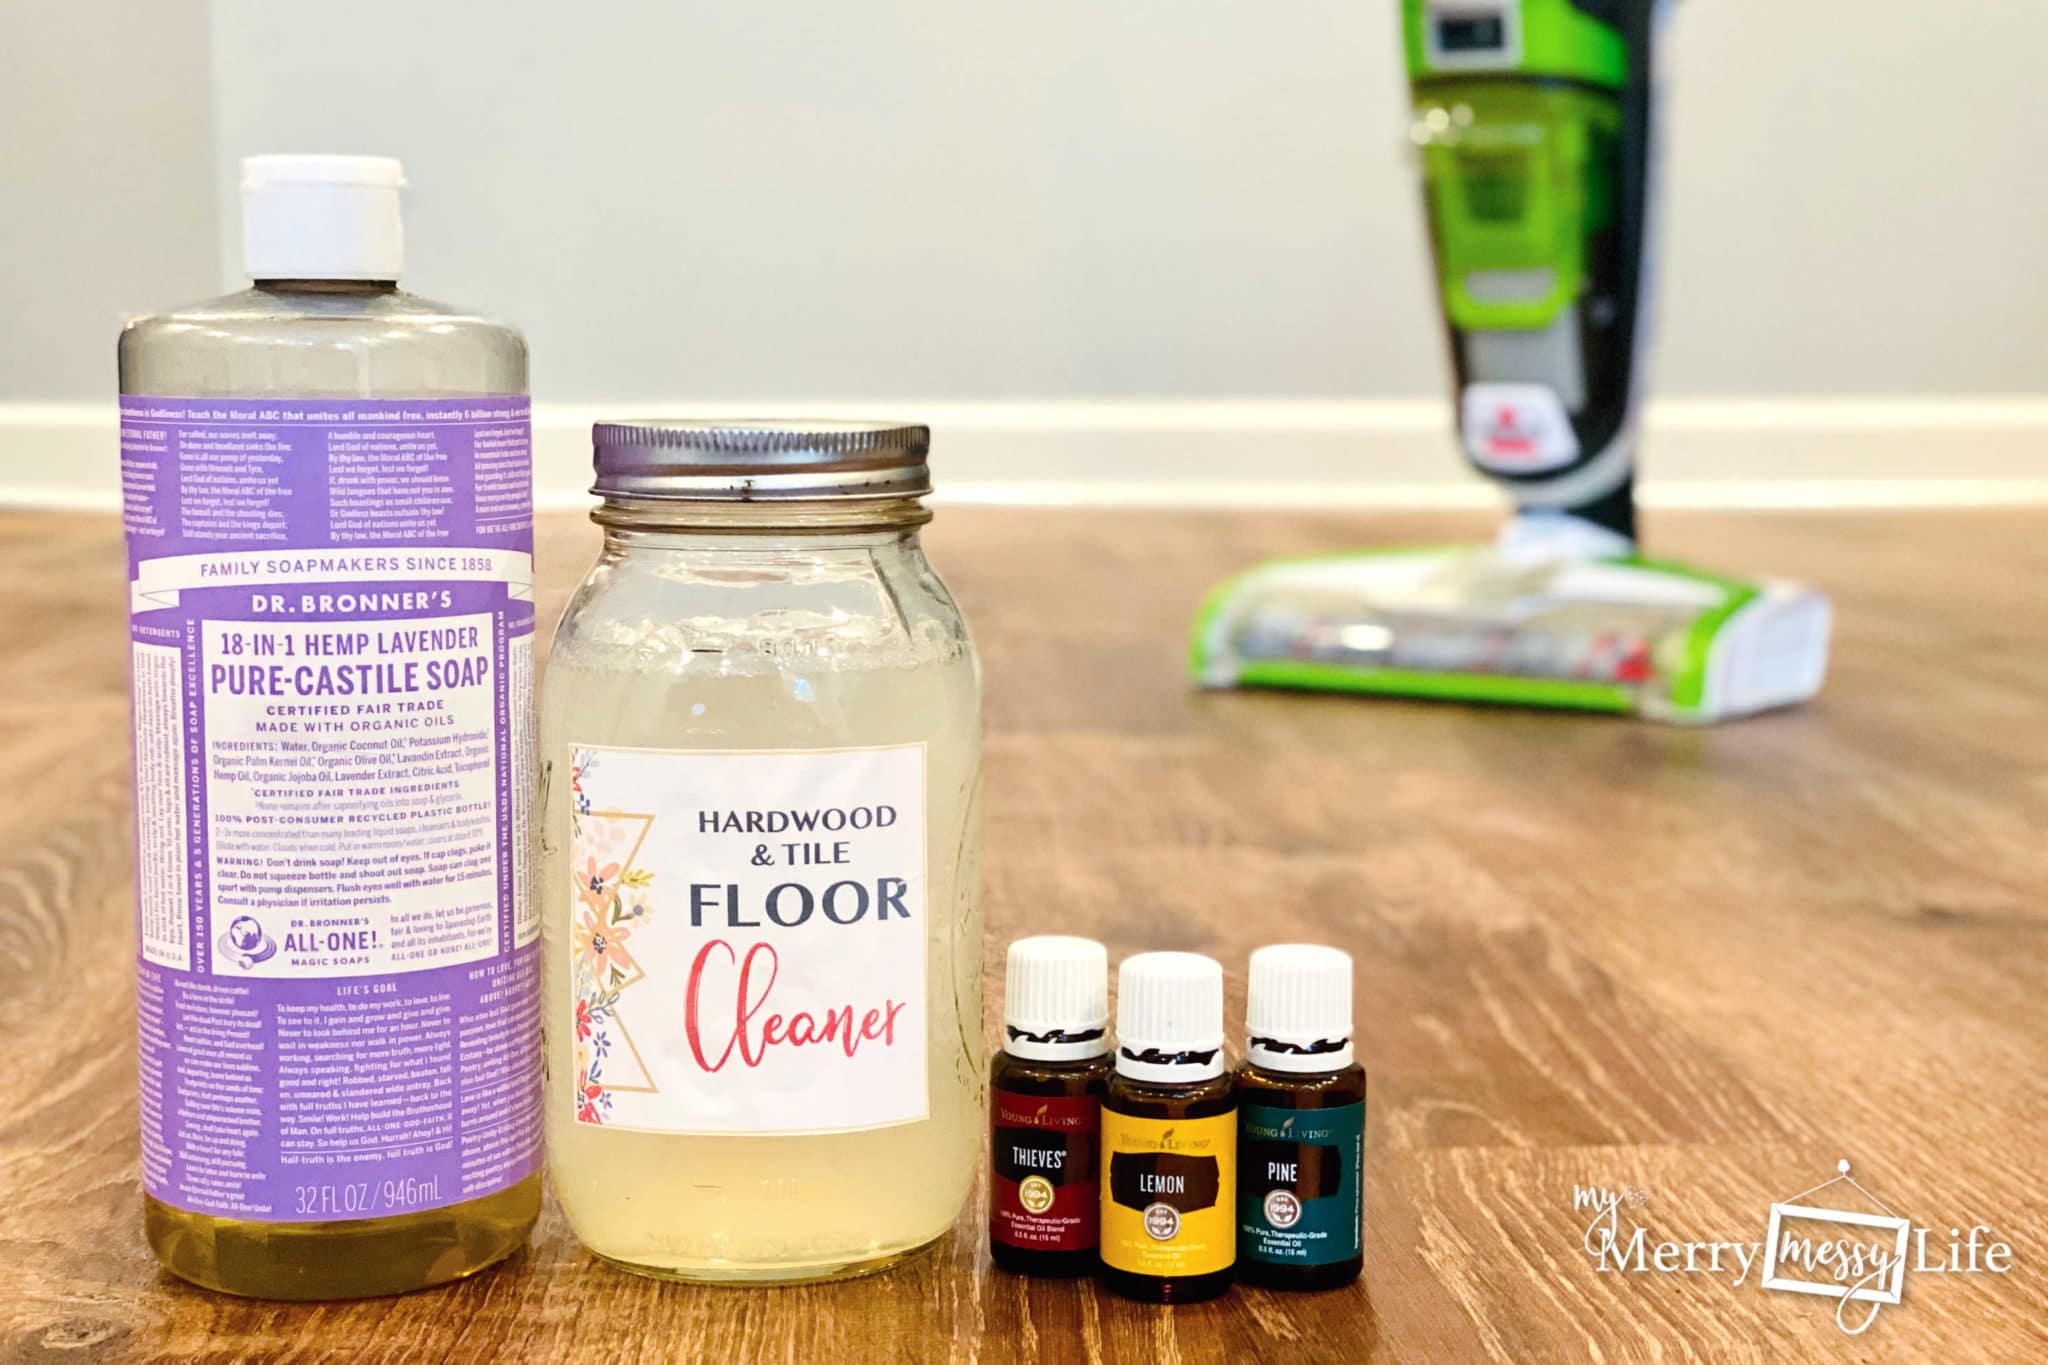 Hardwood and Tile Floor Cleaner Recipe - all natural using Castile Soap, Vinegar, and essential oils 